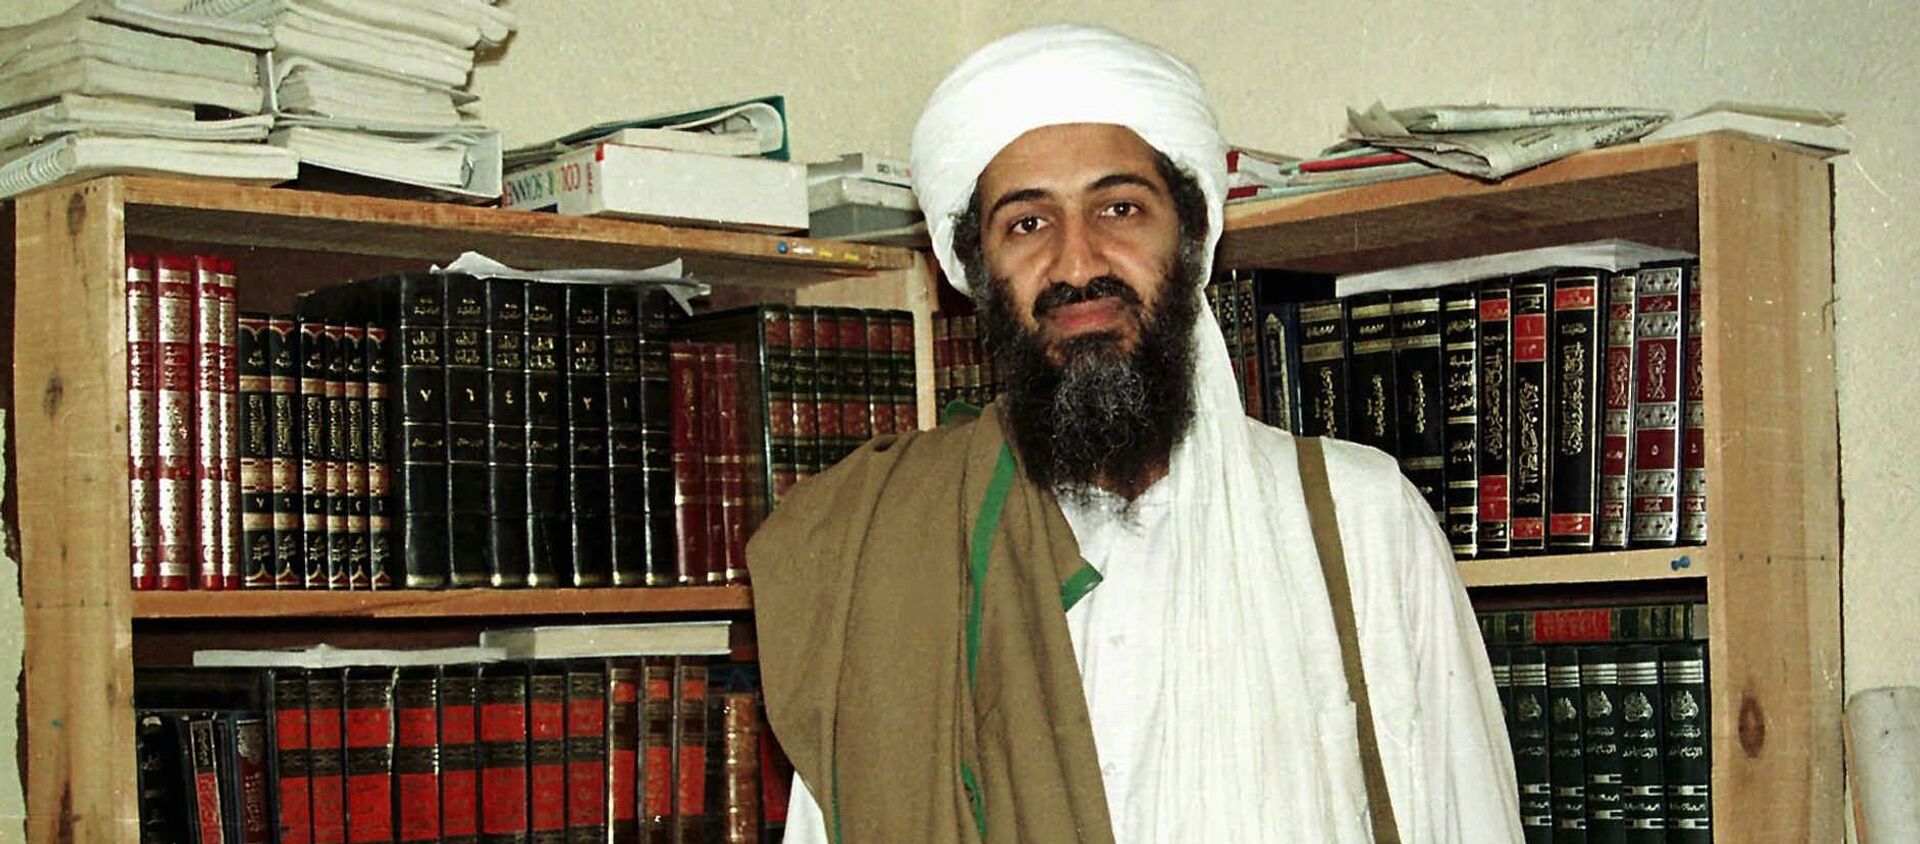 Al-Qaeda leader Osama bin Laden is seen in Afghanistan. (File) - Sputnik International, 1920, 02.05.2021